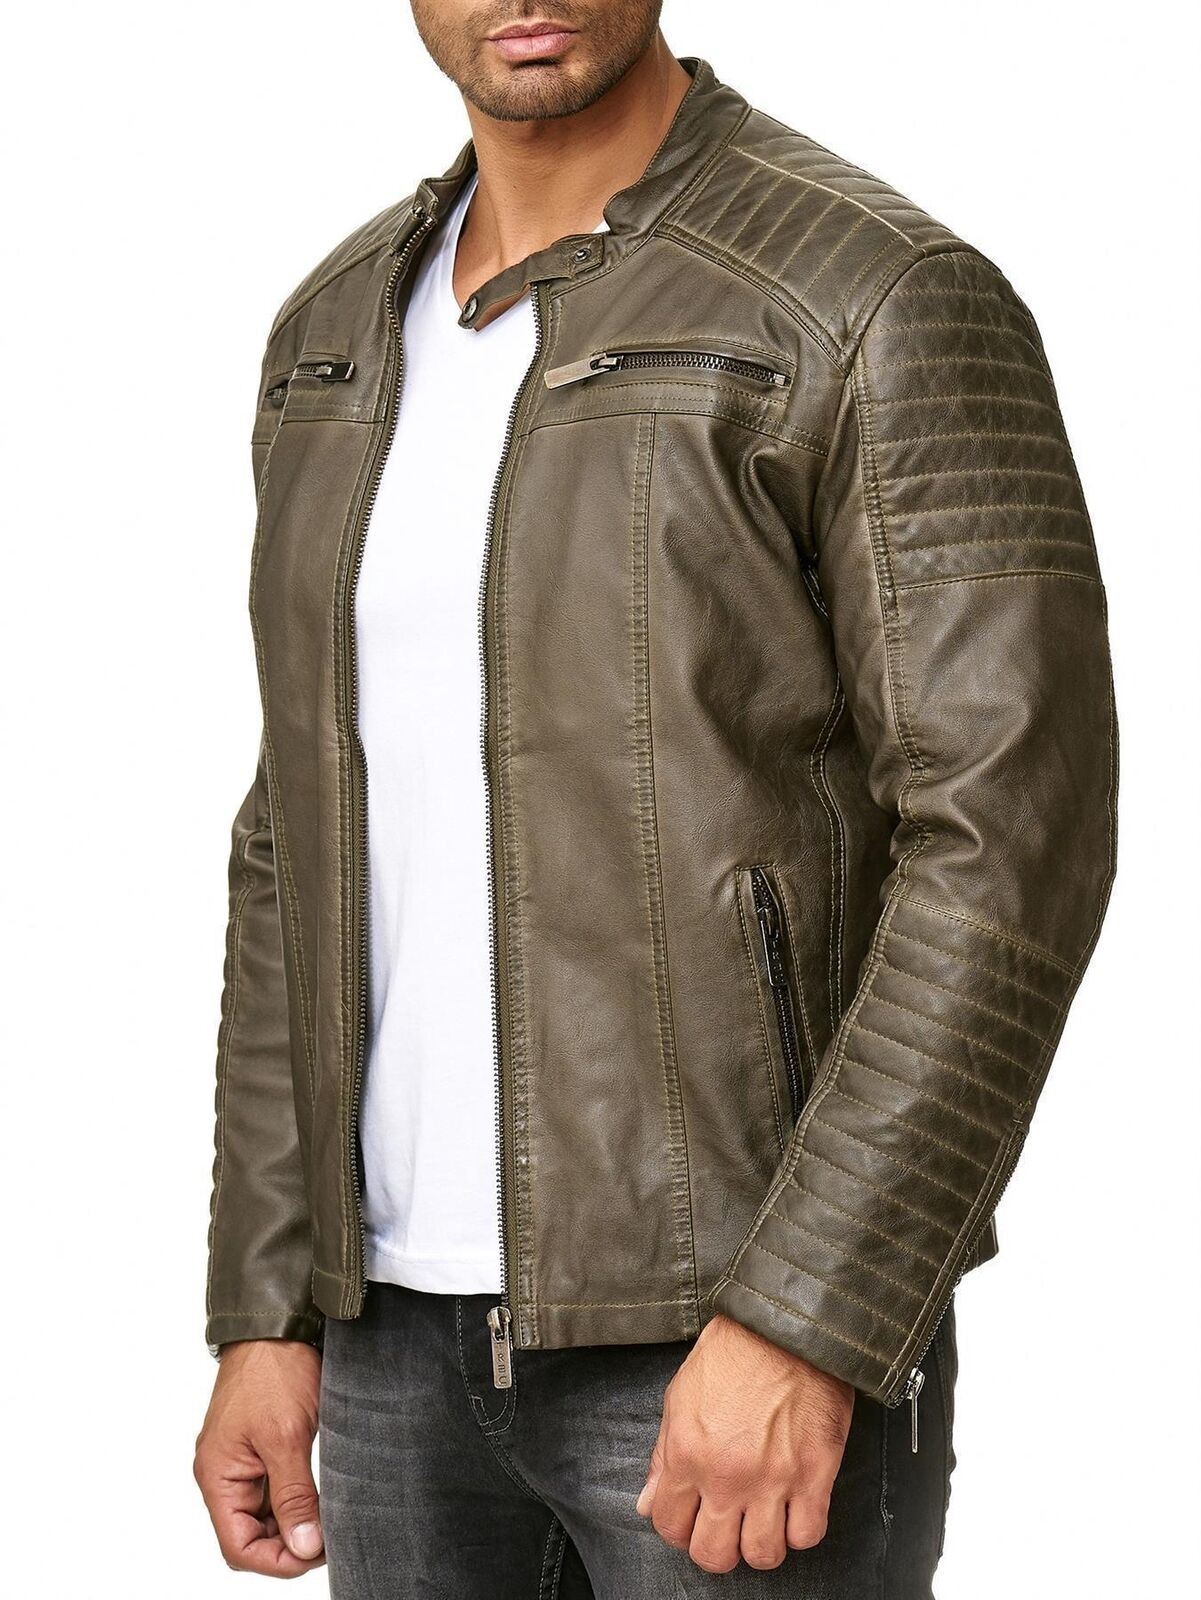 Cooper Biker Style Leather Jacket